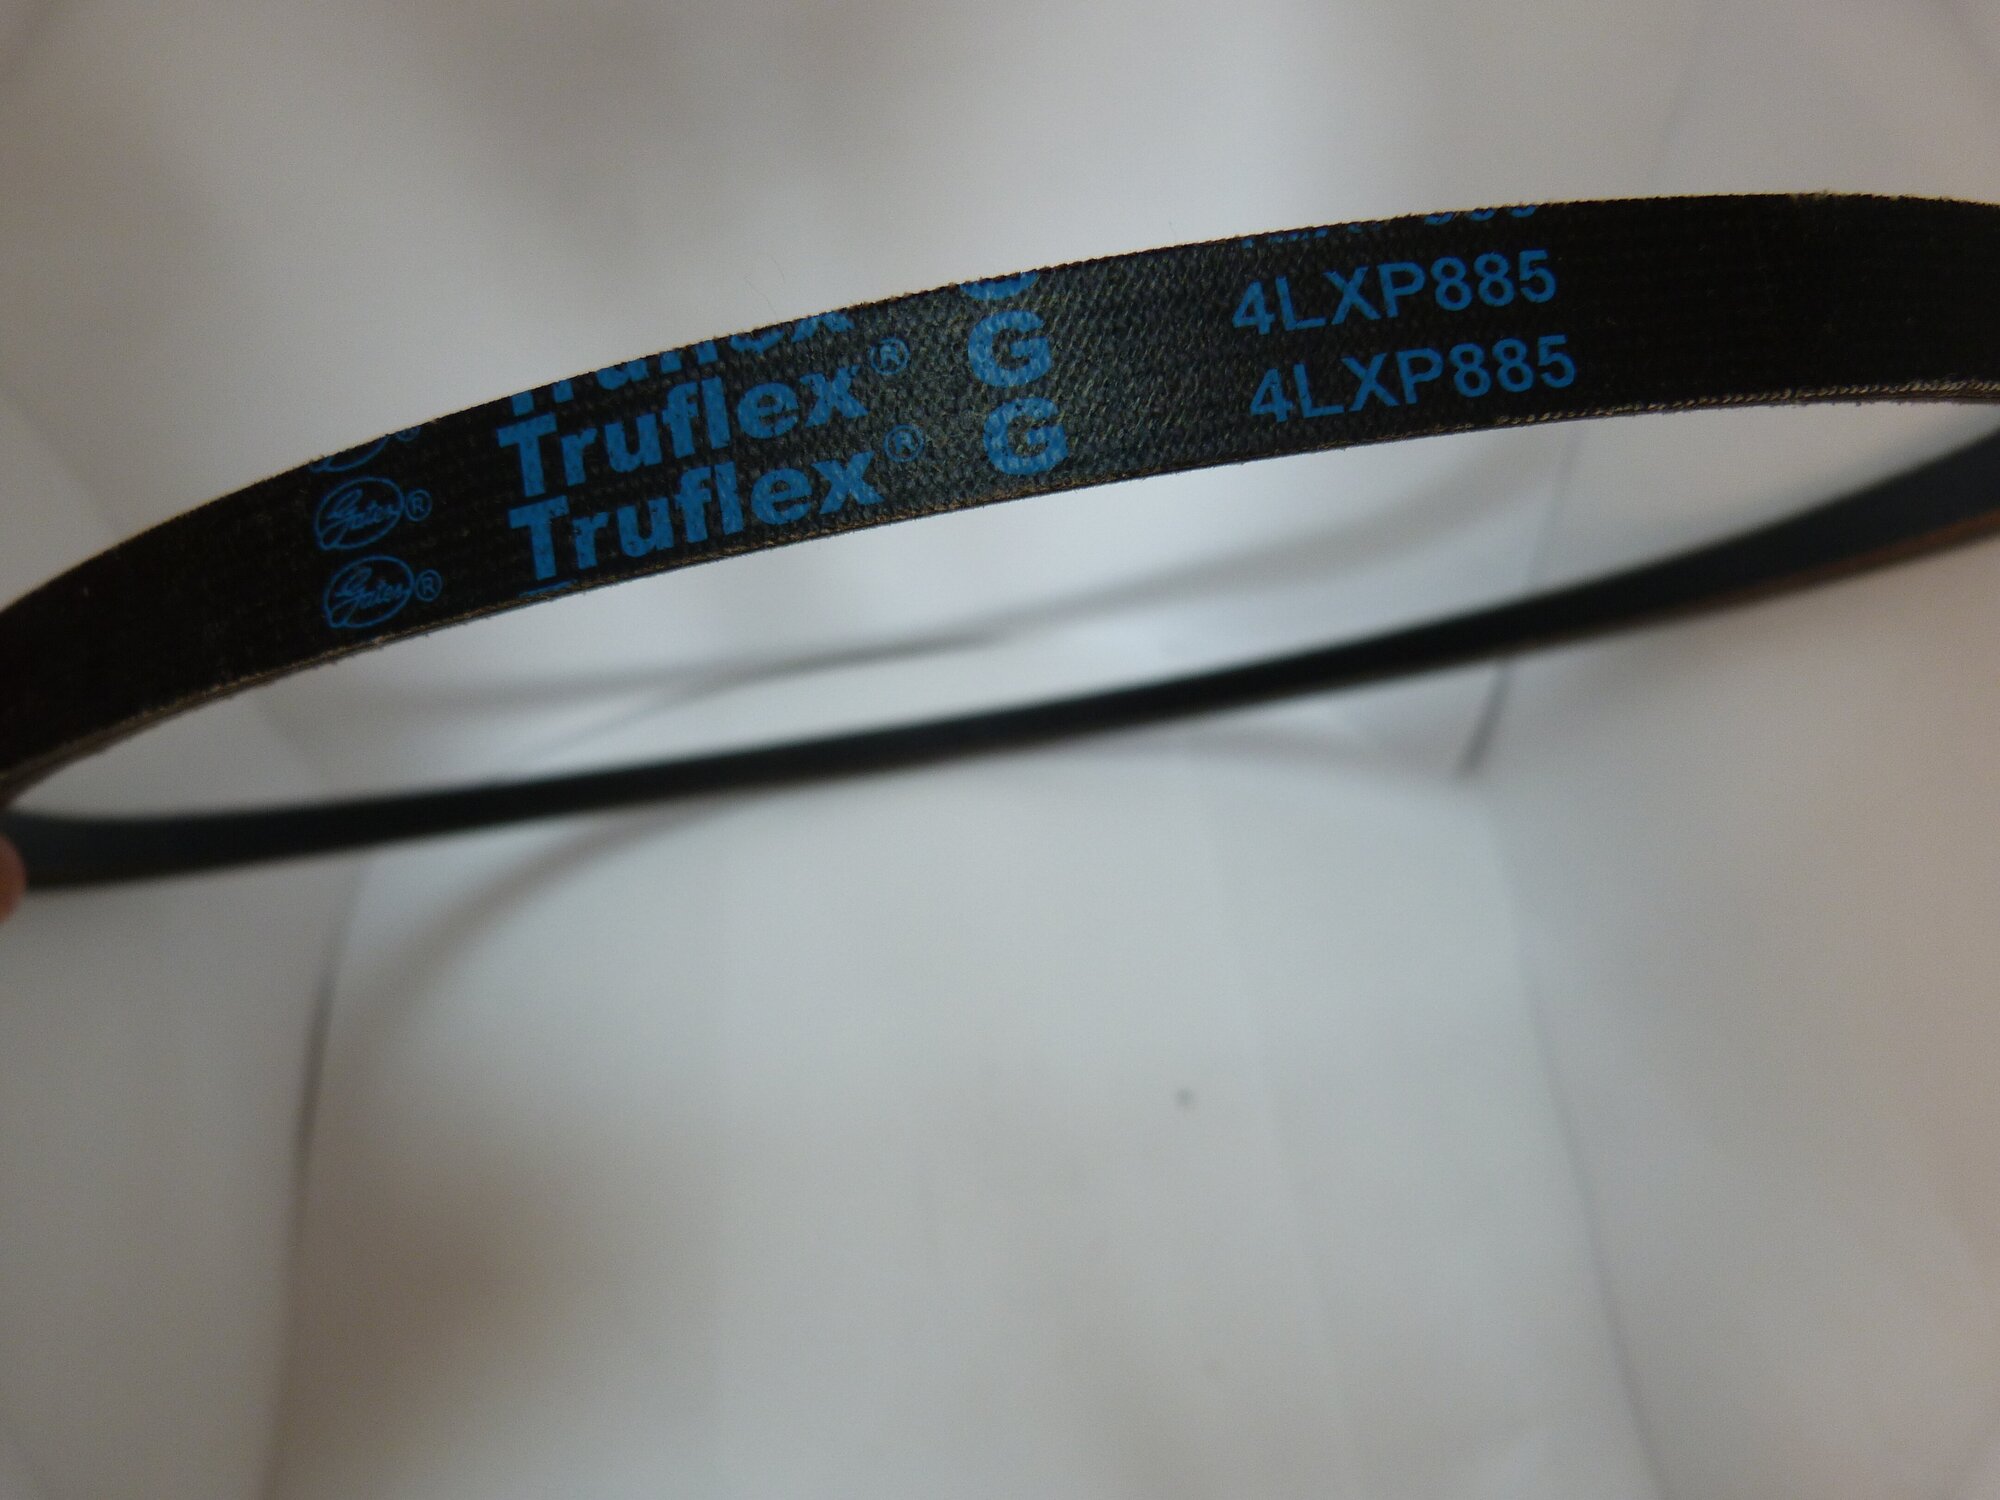 Ремень шнека 4LXP885 TRUFLEX (STG6556)